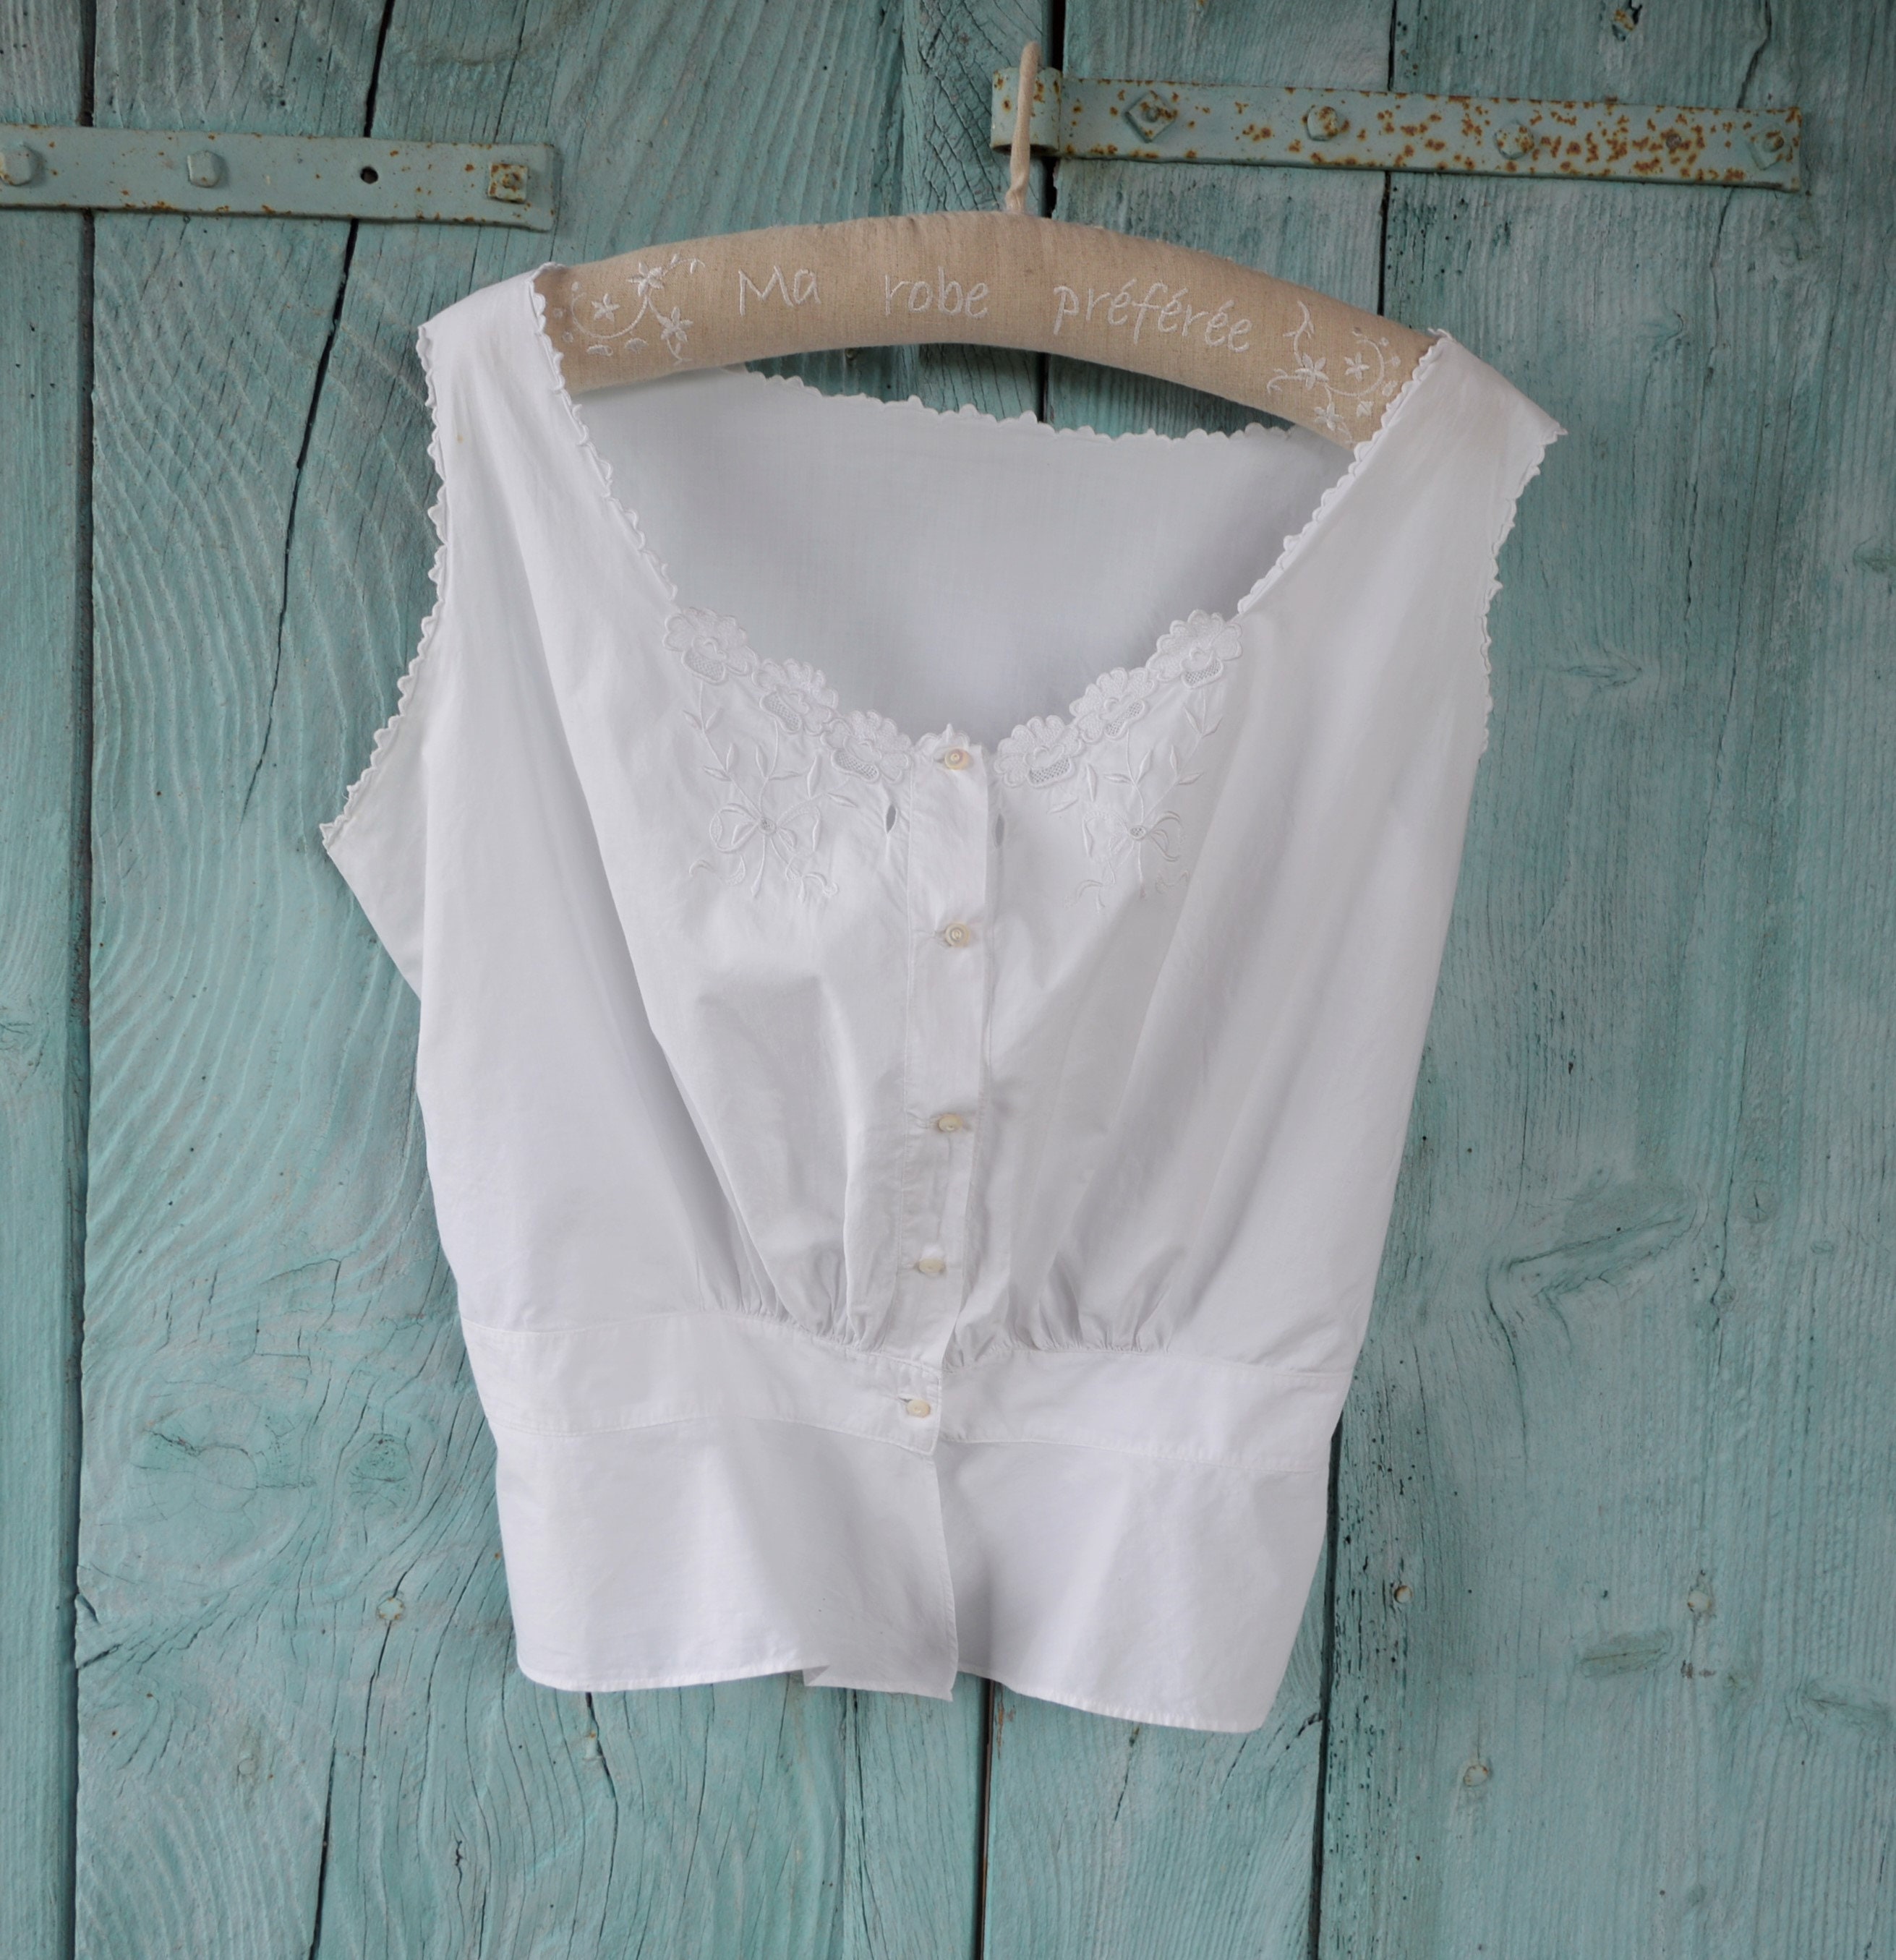 Antique French White Cotton Lace Camisole Cache Corset | Etsy